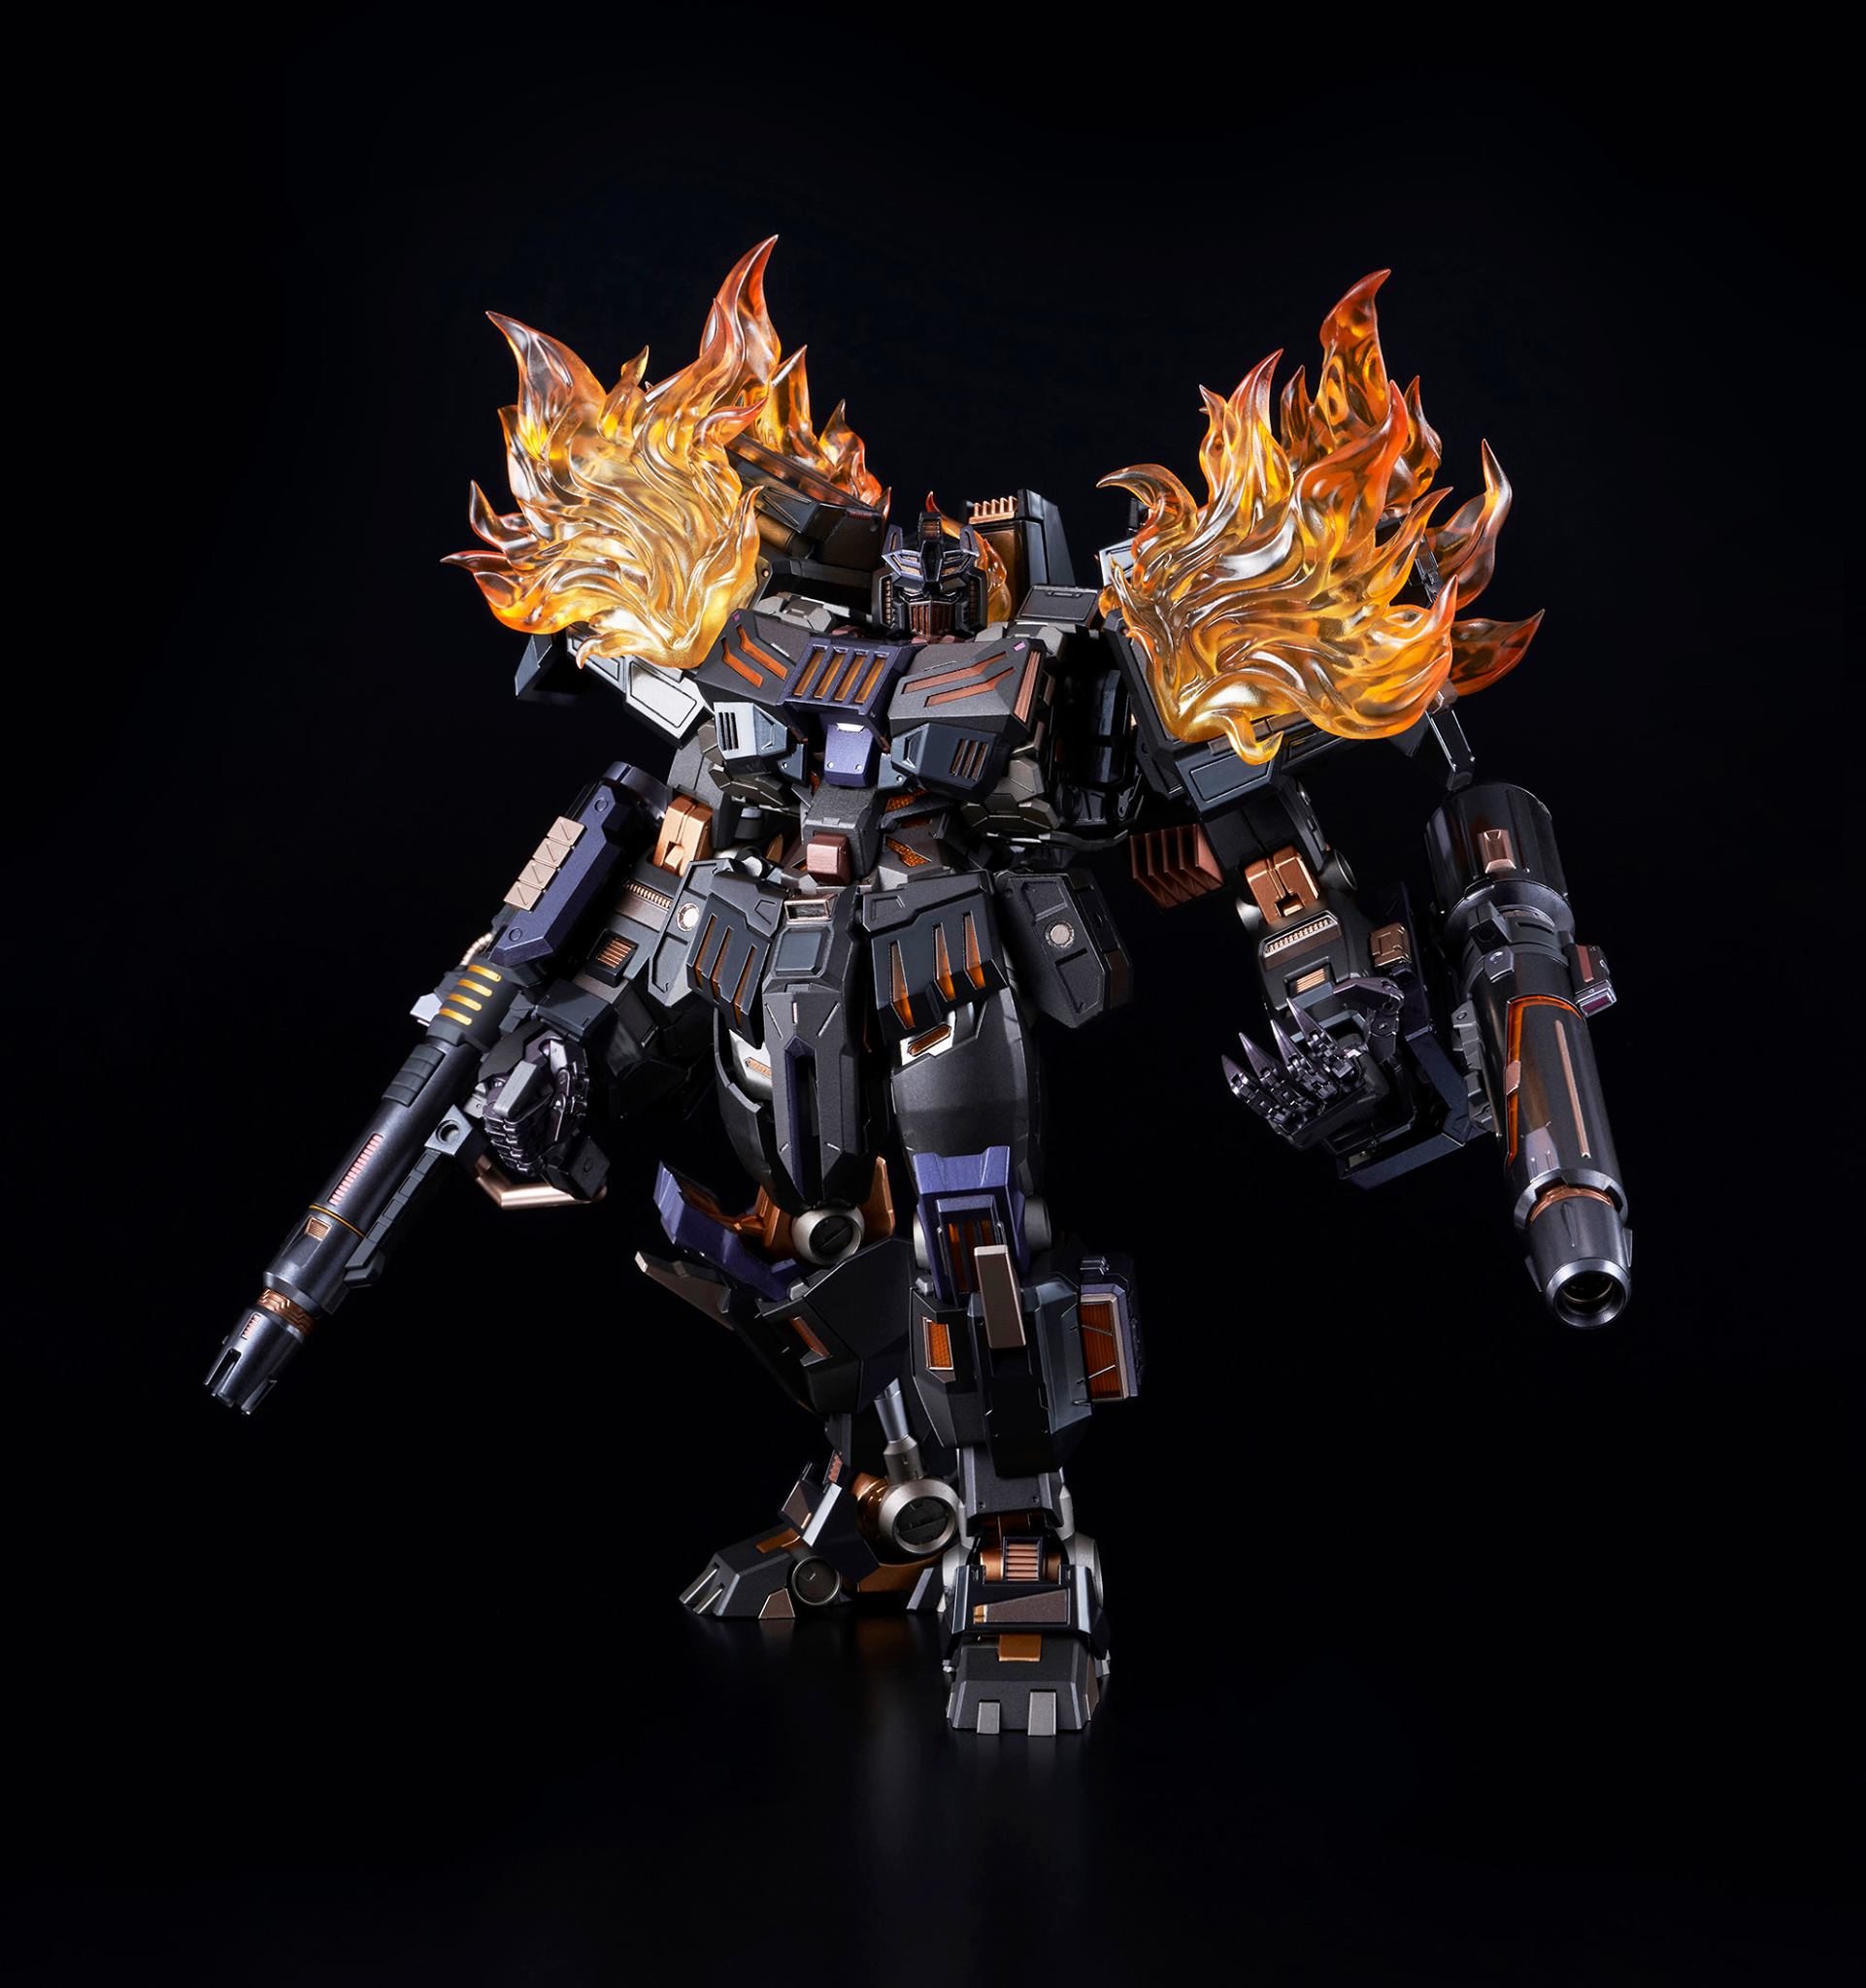 Flame Toys - Transformers - Kuro Kara Kuri 07 - The Fallen (Megatronus Prime) - Marvelous Toys